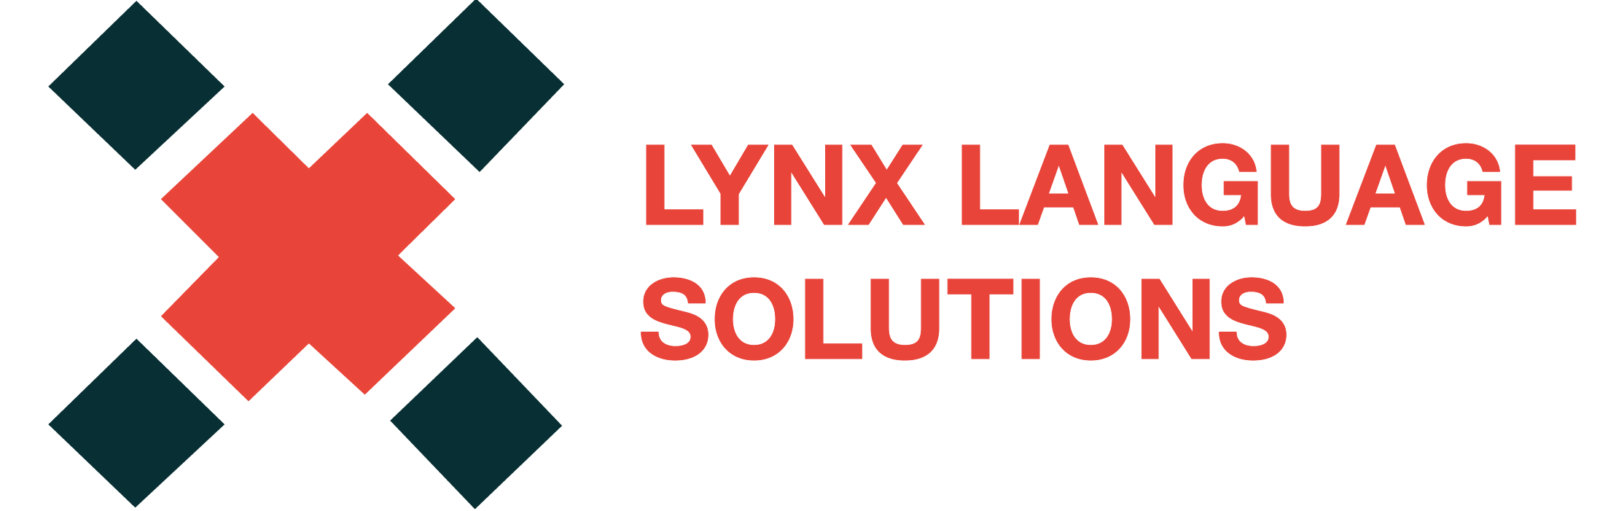 Lynx Language Solutions